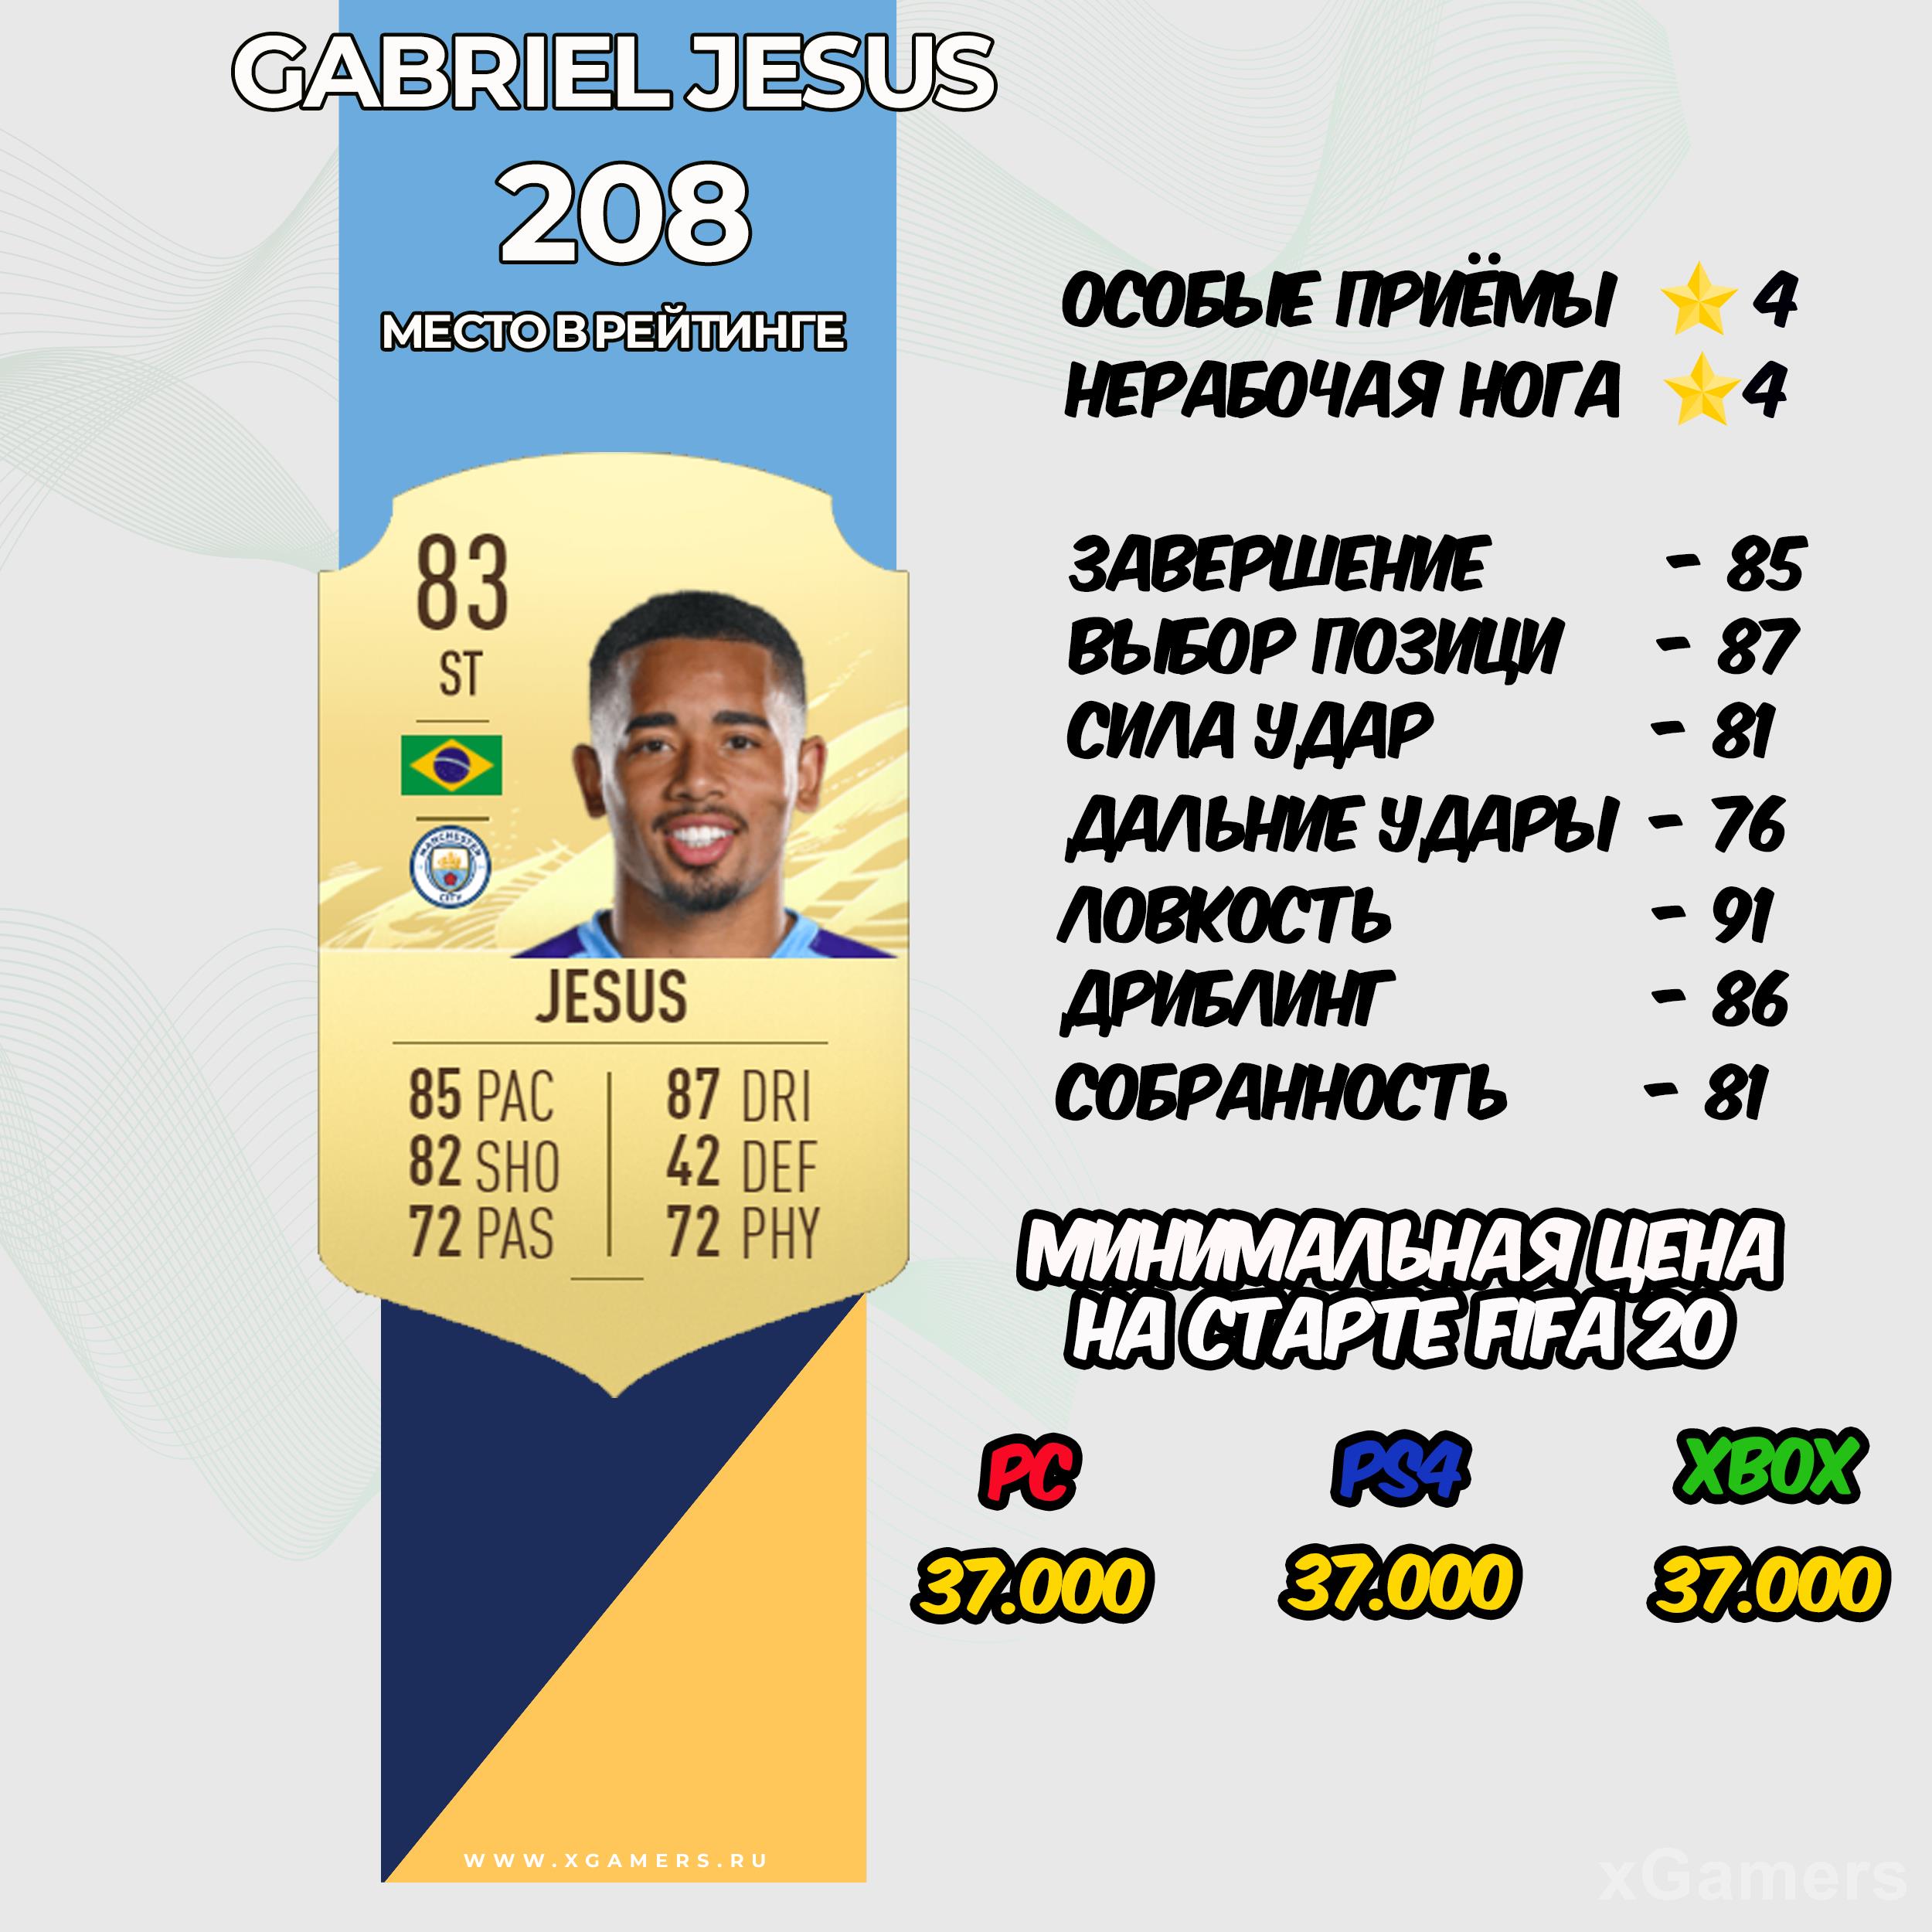 Gabriel Jesus - место в рейтинге 208